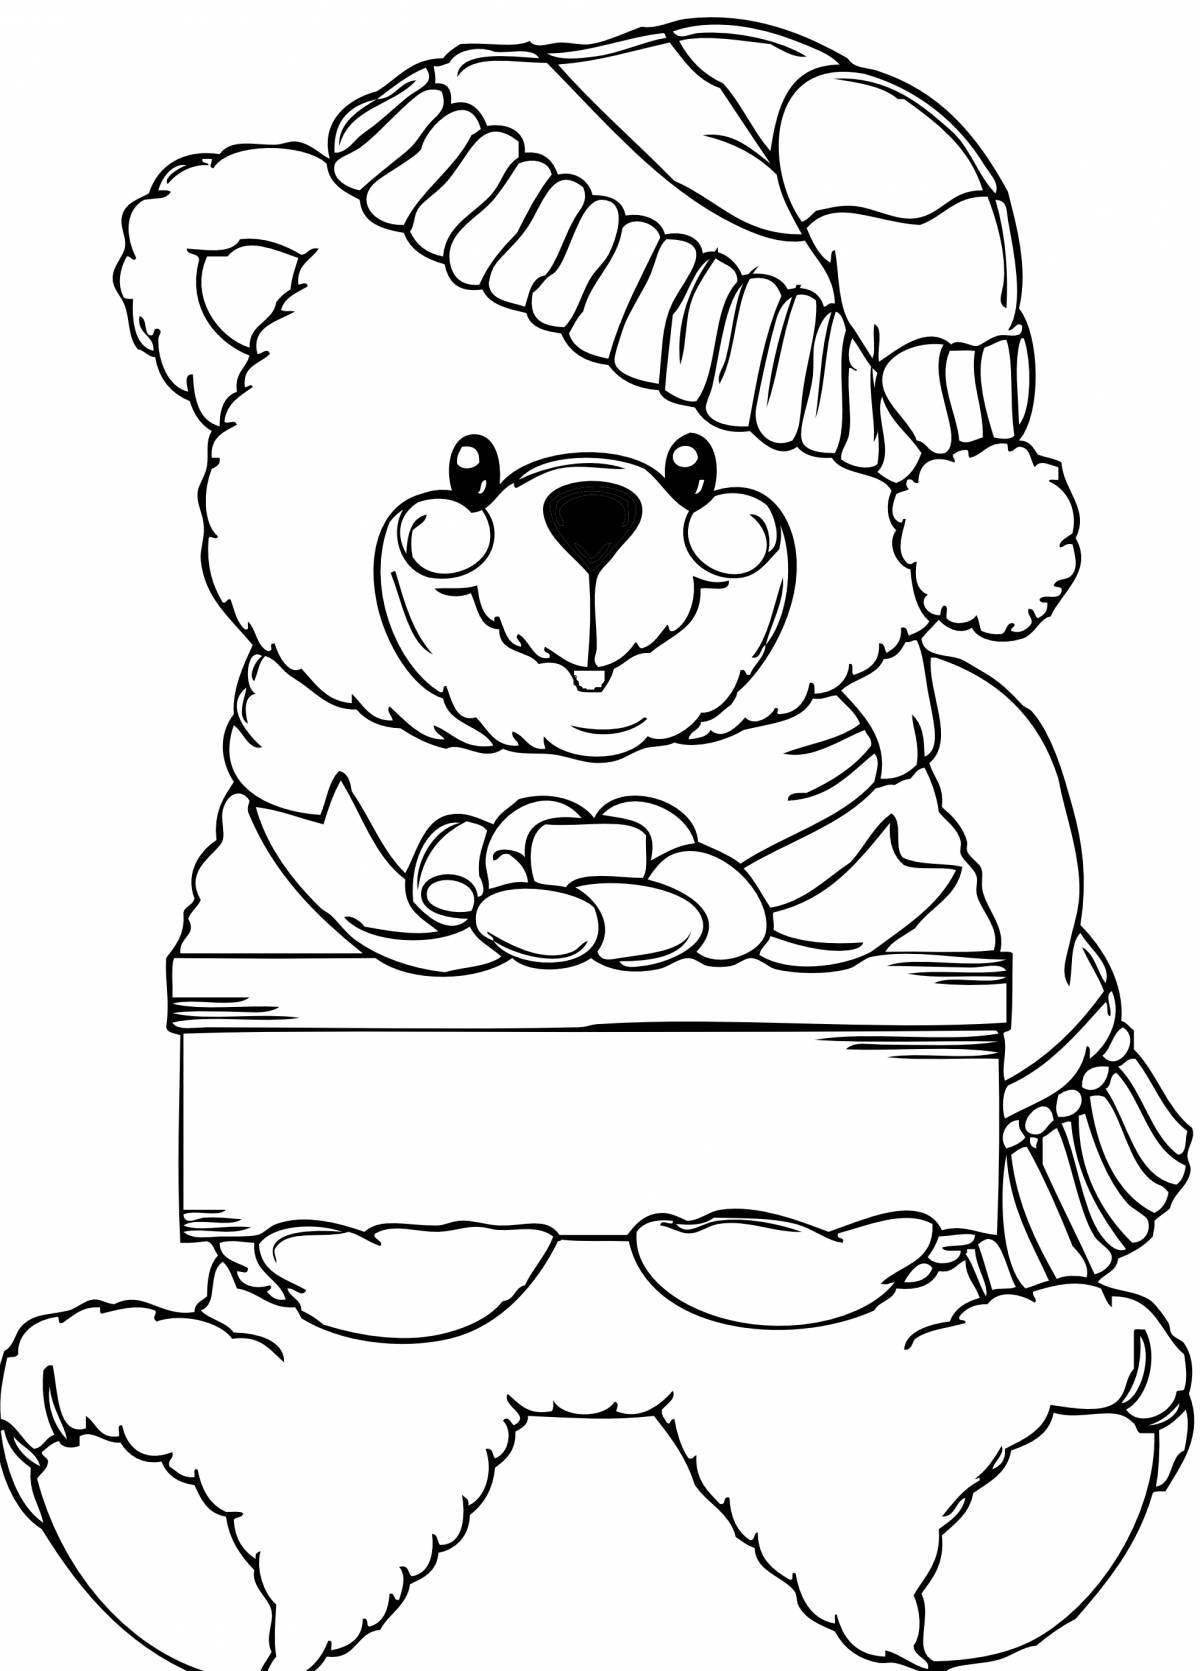 Coloring soft teddy bear